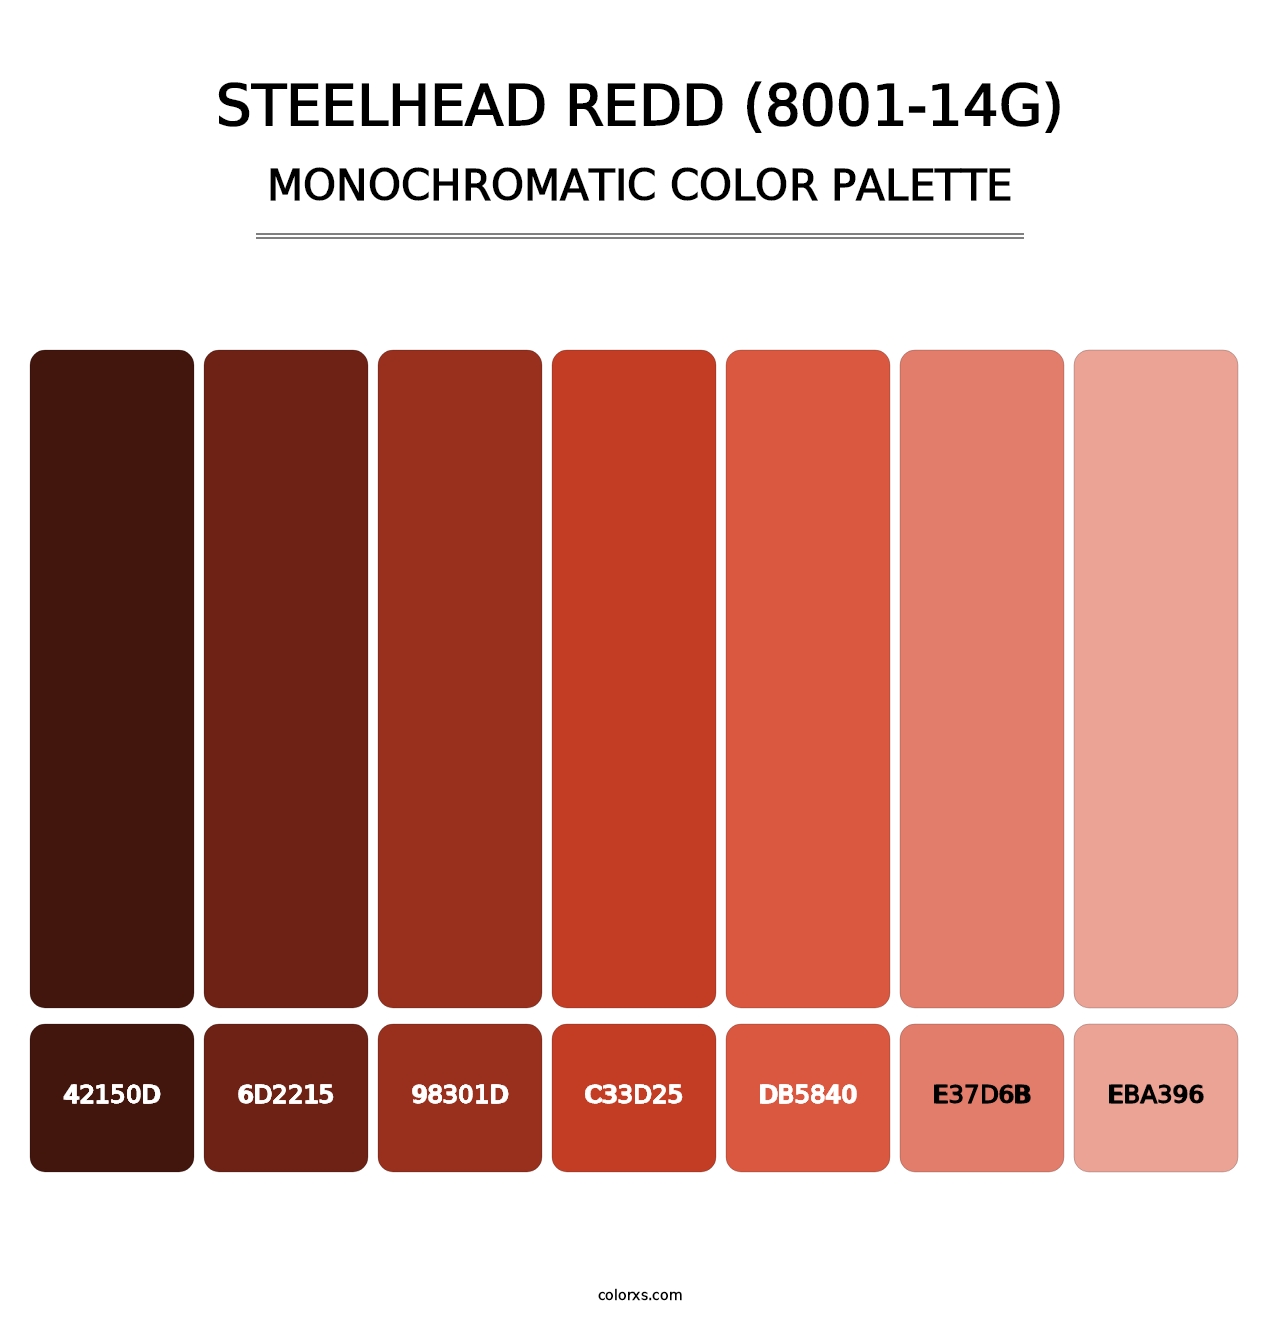 Steelhead Redd (8001-14G) - Monochromatic Color Palette